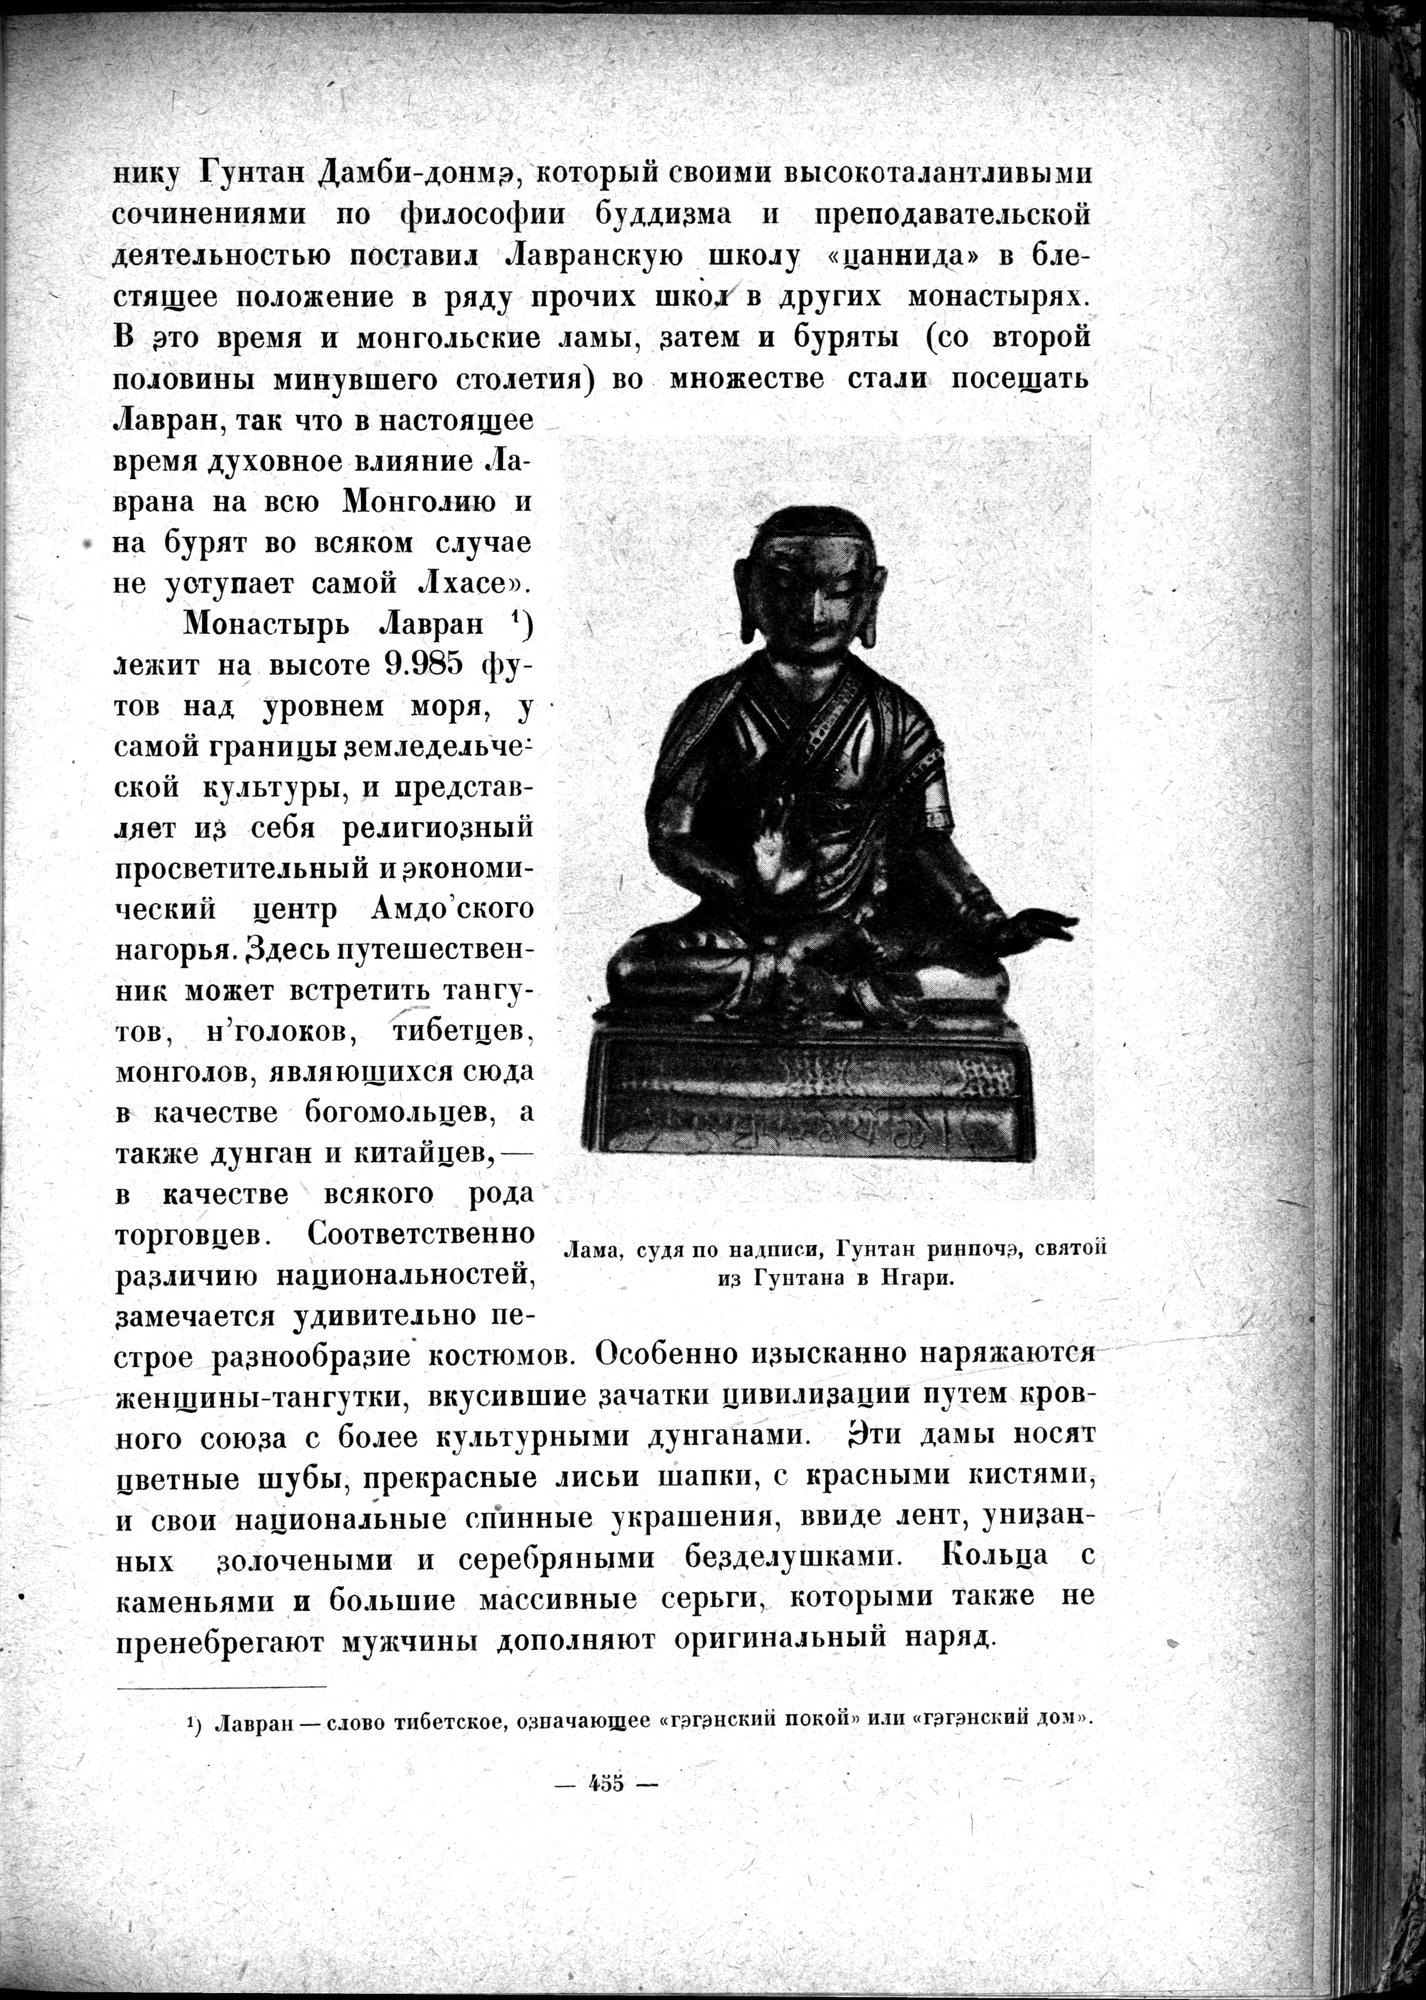 Mongoliya i Amdo i mertby gorod Khara-Khoto : vol.1 / Page 519 (Grayscale High Resolution Image)